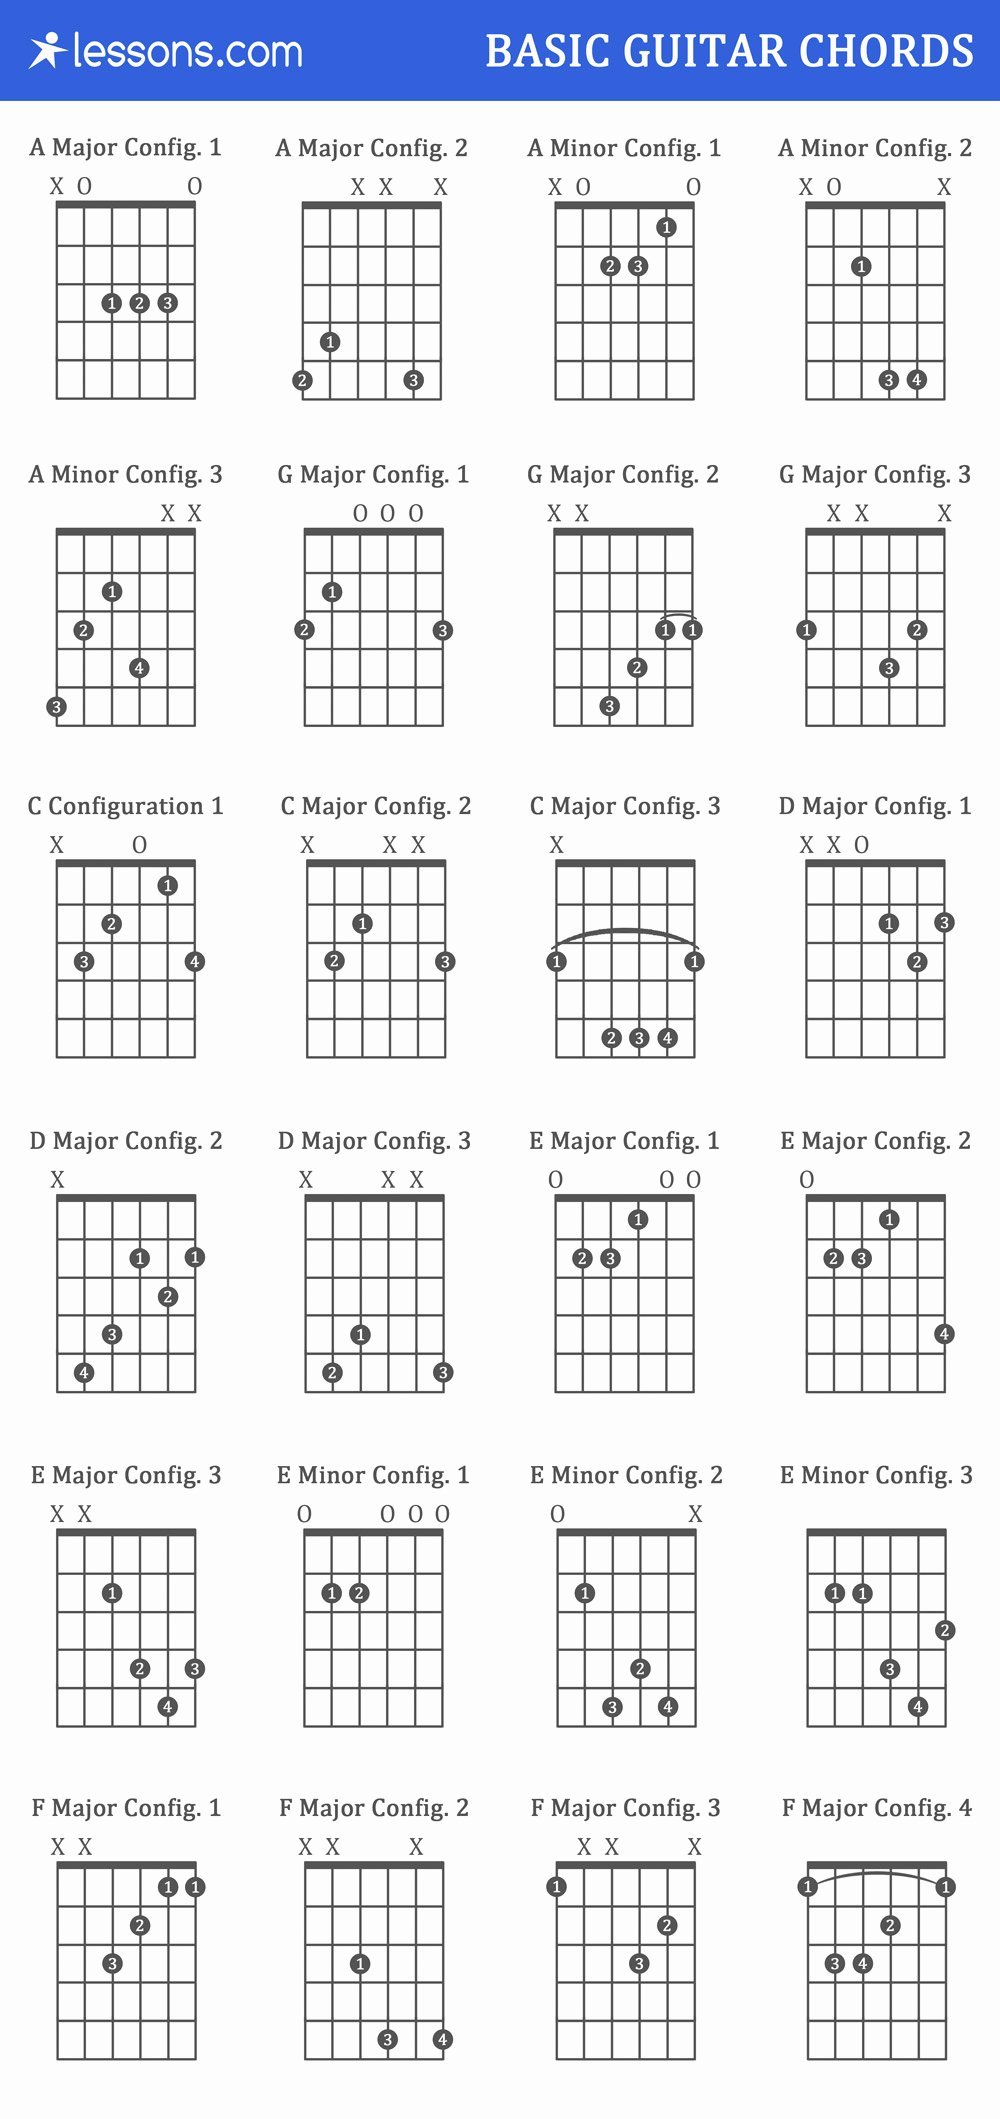 Beginner Guitar Chords Chart Luxury the 8 Basic Guitar Chords for Beginners with Charts